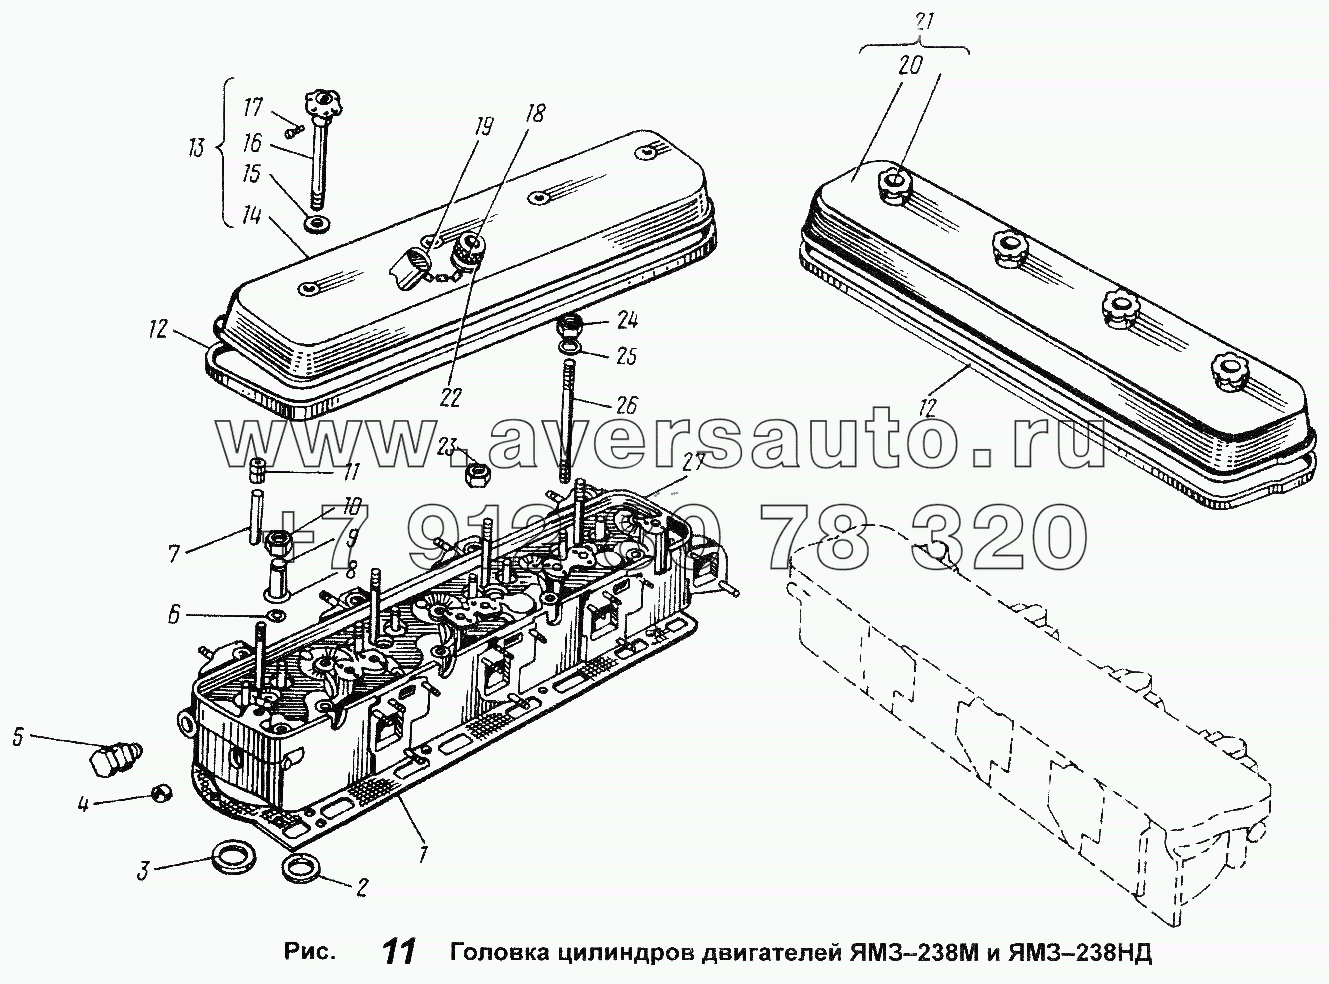 Головка цилиндров двигателей ЯМЗ-238М и ЯМЗ-238НД